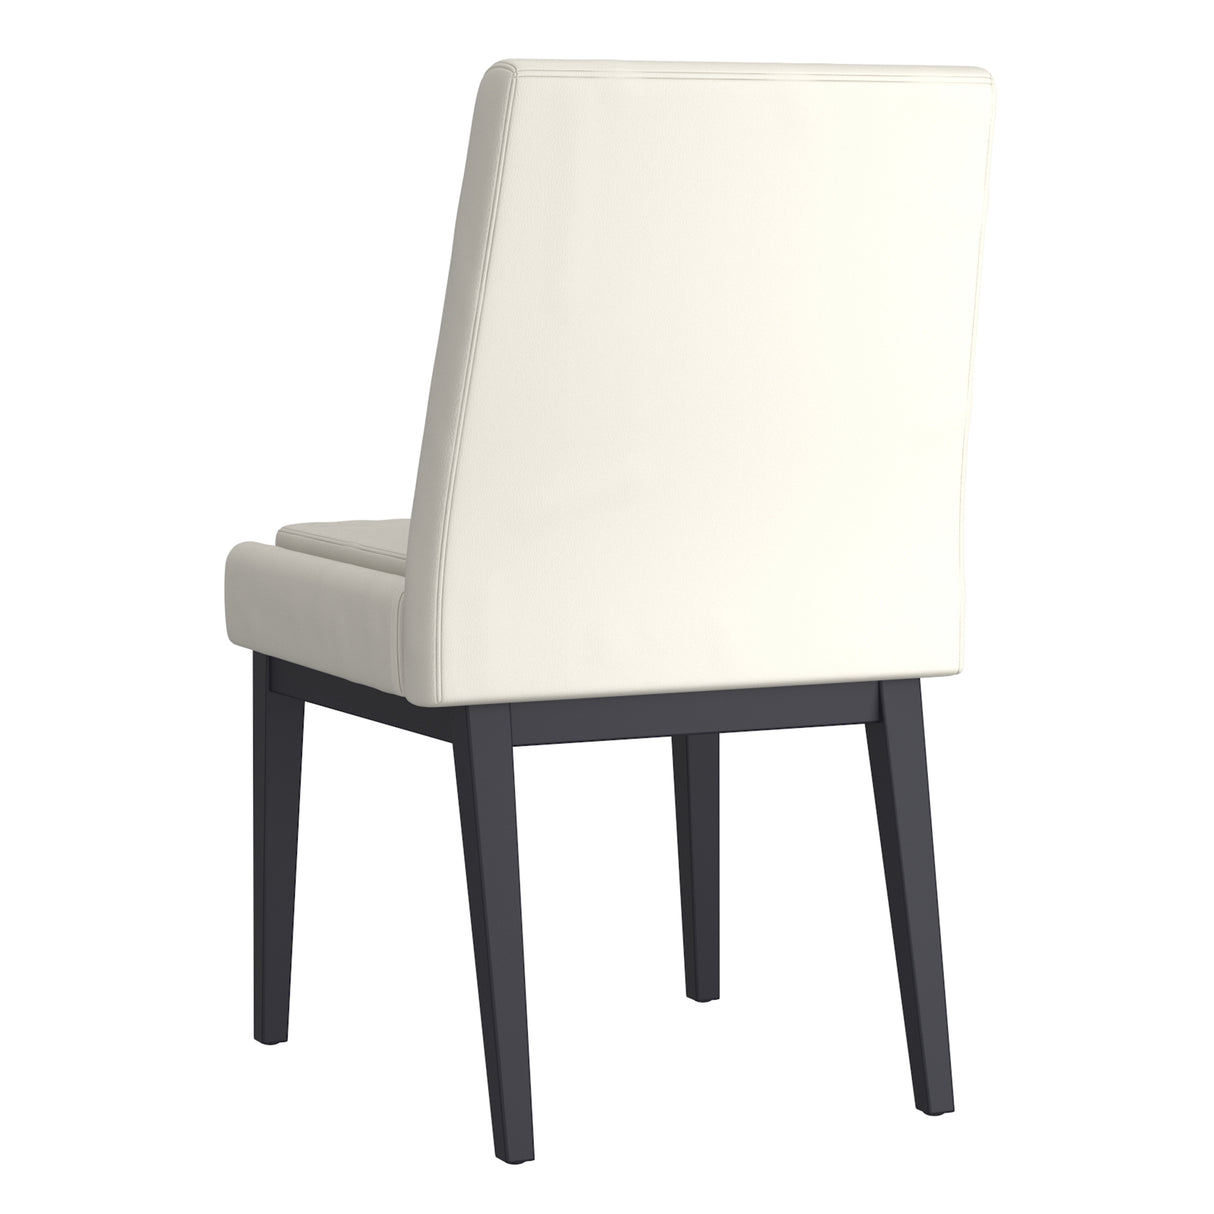 Cortez Side Chair Pu Beige Black (Set of 2)